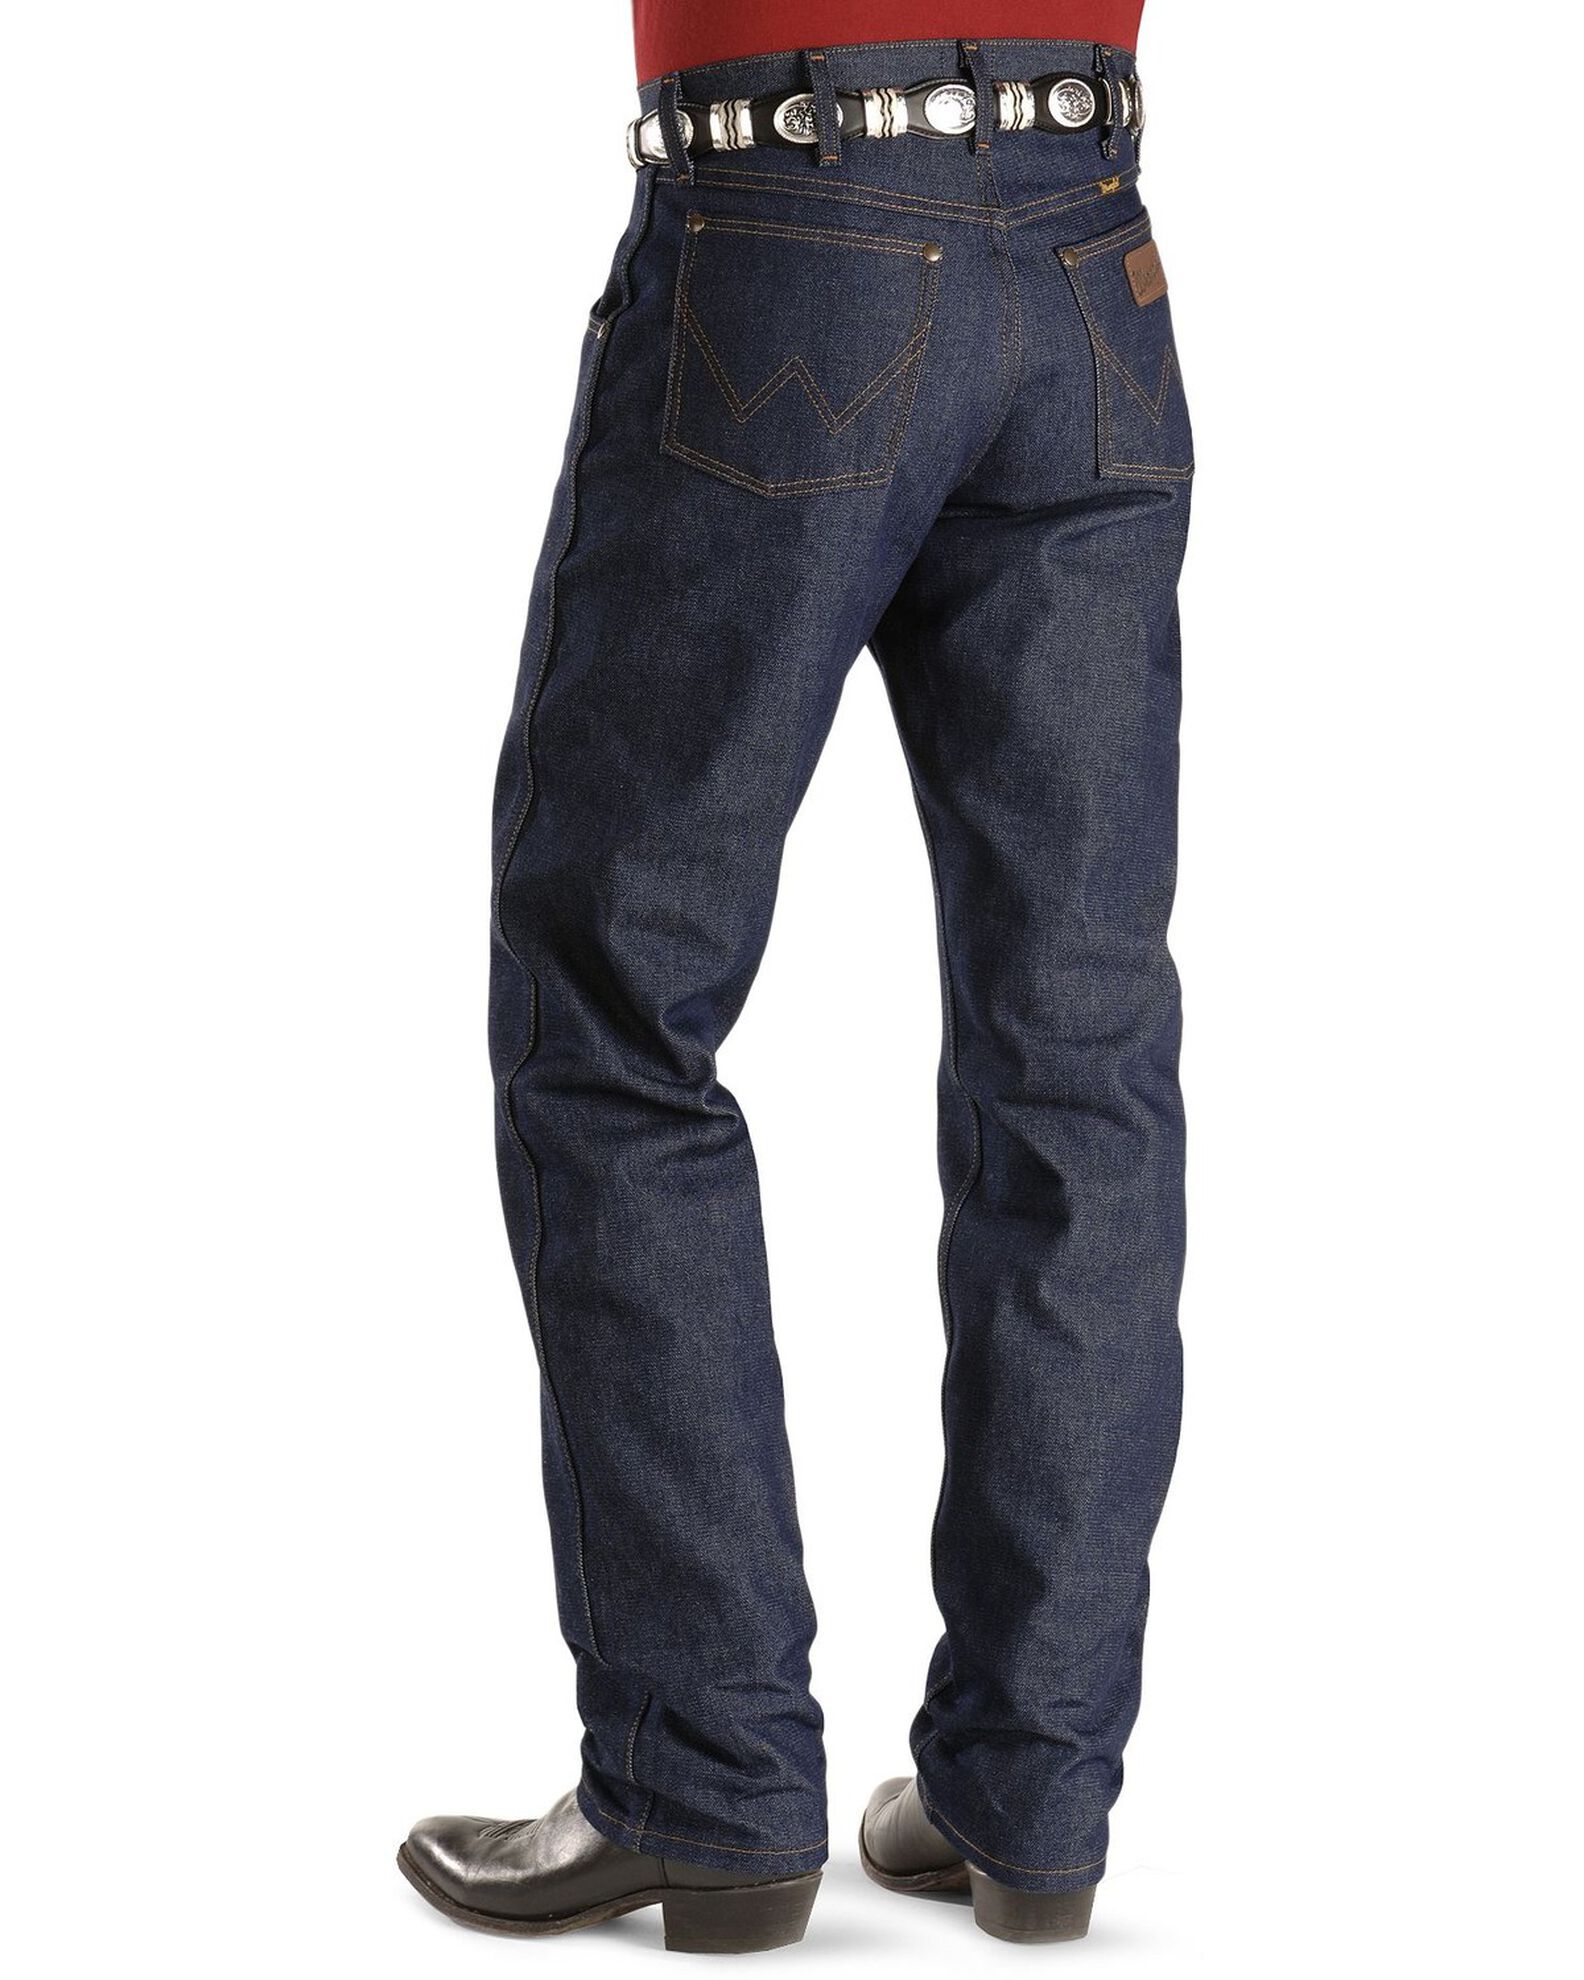 Wrangler 47MWZ Premium Performance Cowboy Cut Rigid Regular Fit Jeans Boot Barn